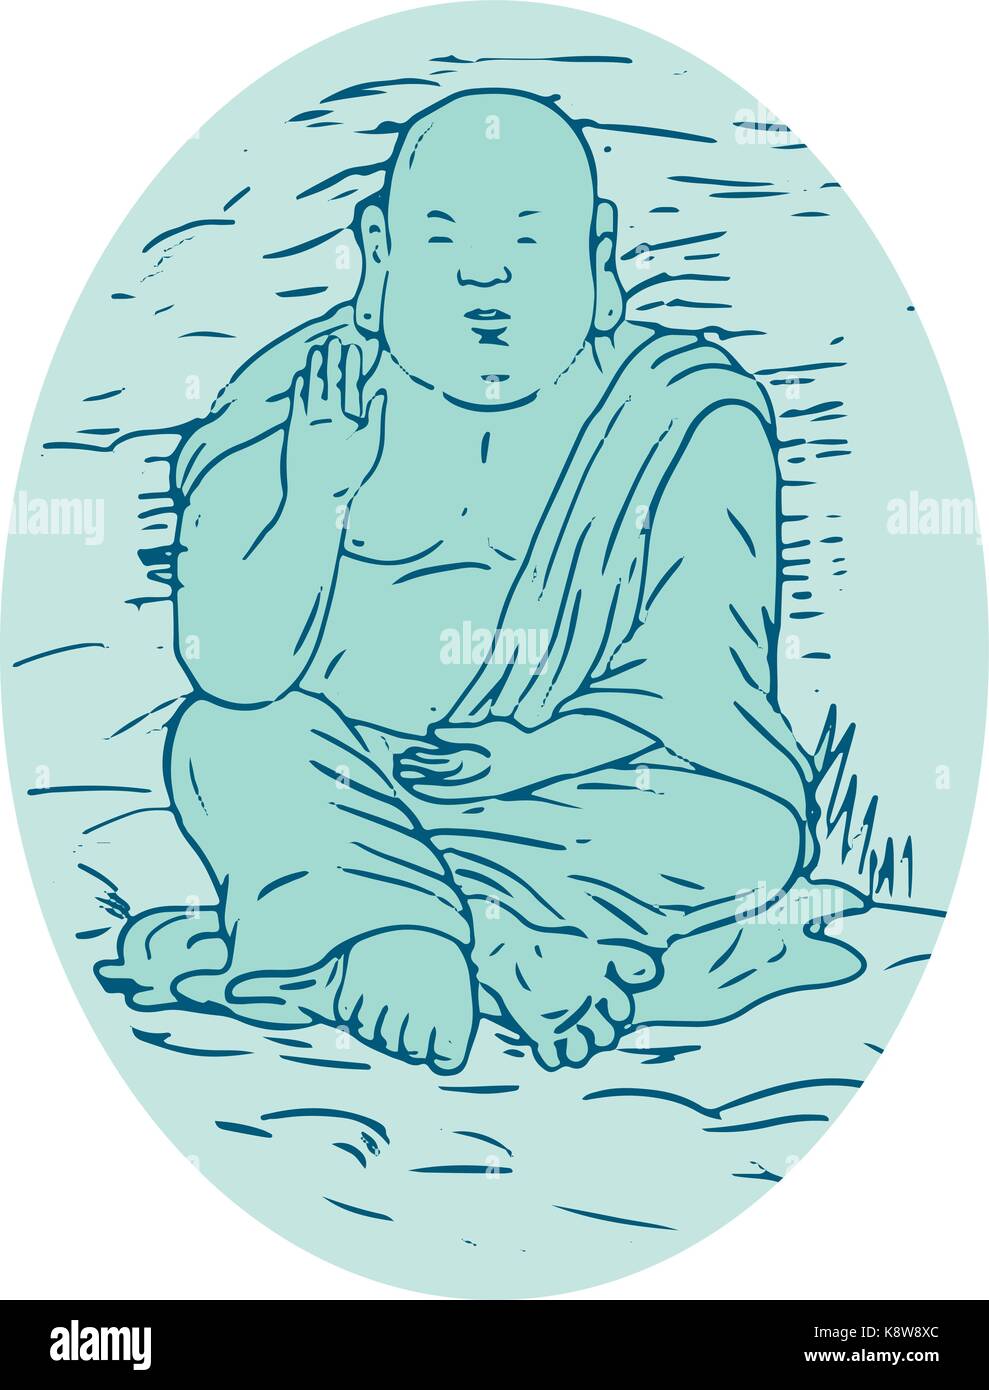 Drawing sketch style illustration of Gautama Buddha, also known as Siddhartha Gautama, Shakyamuni Buddha, an ascetic and sage in lotus sitting pose se Stock Vector